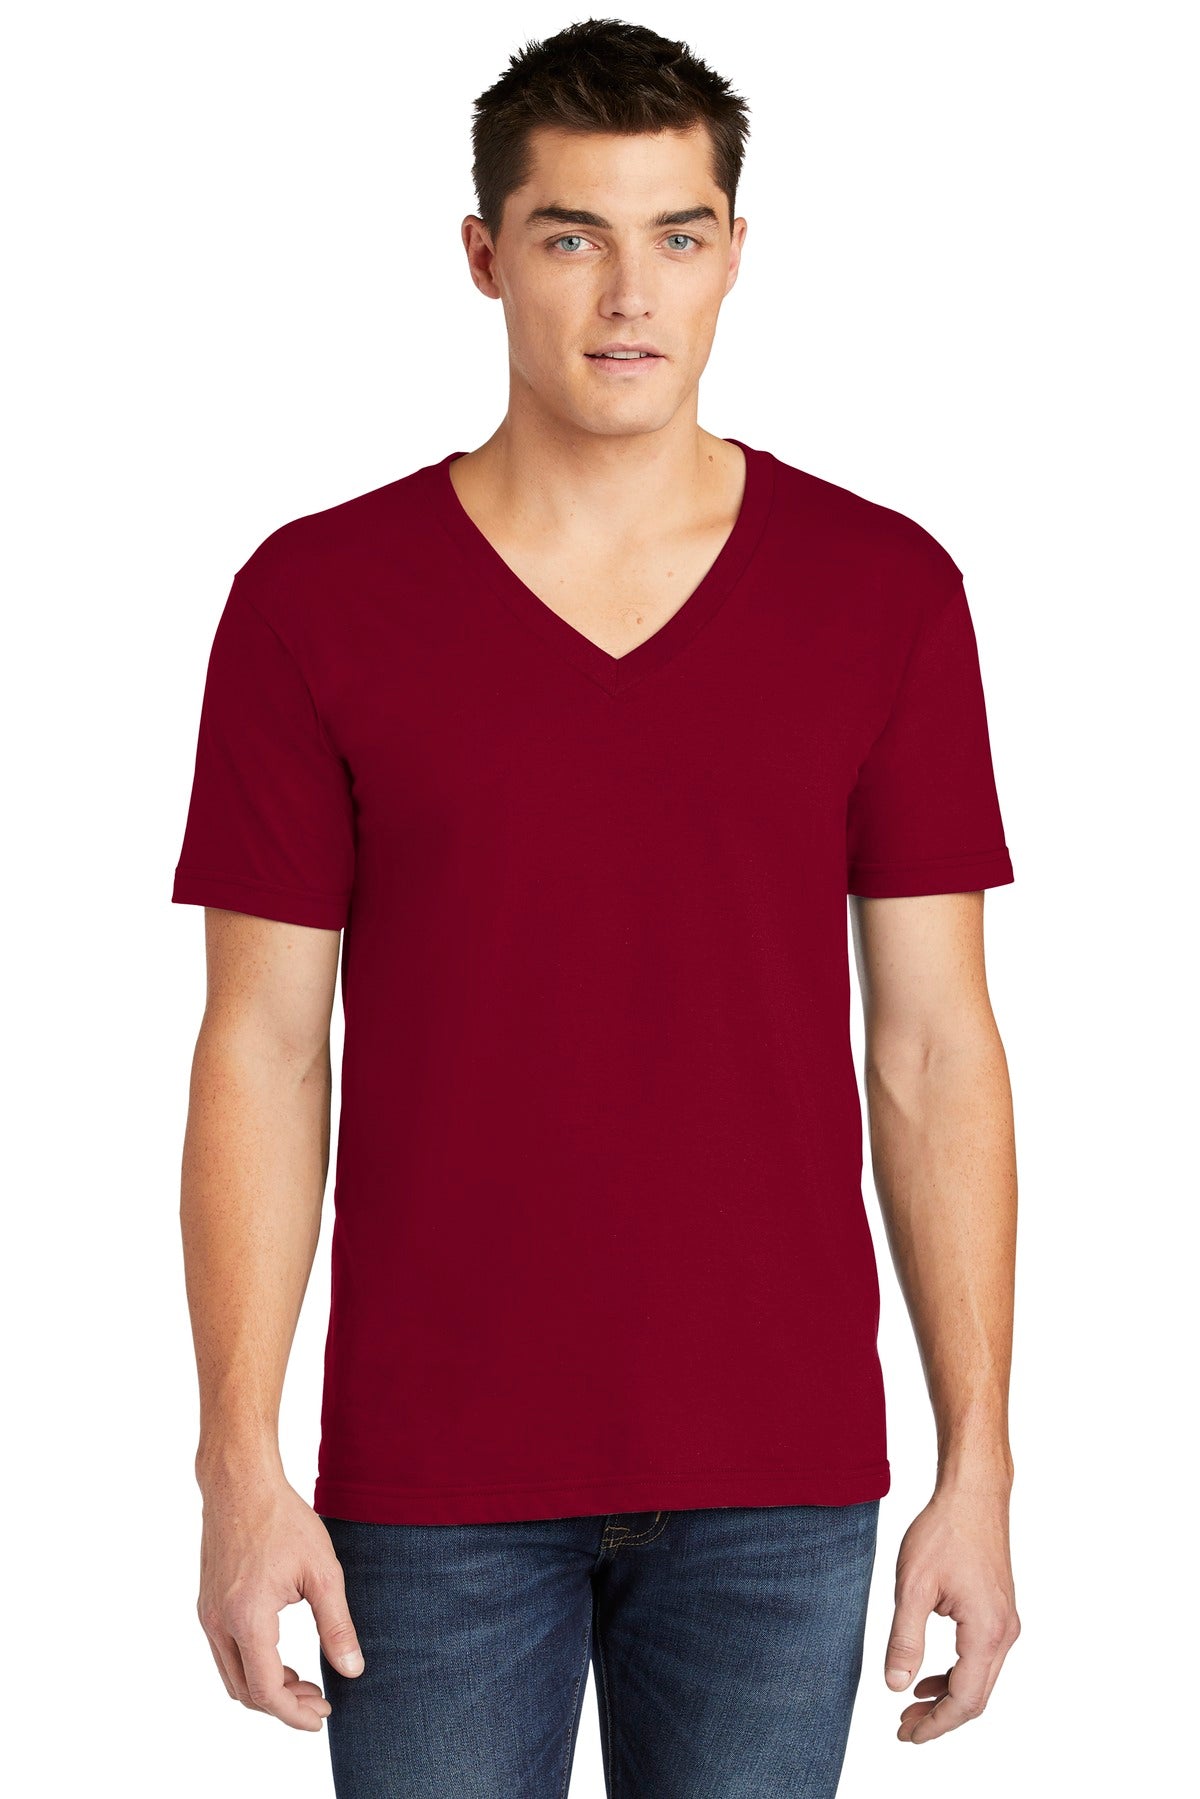 American Apparel ® Fine Jersey V-Neck T-Shirt. 2456W - DFW Impression